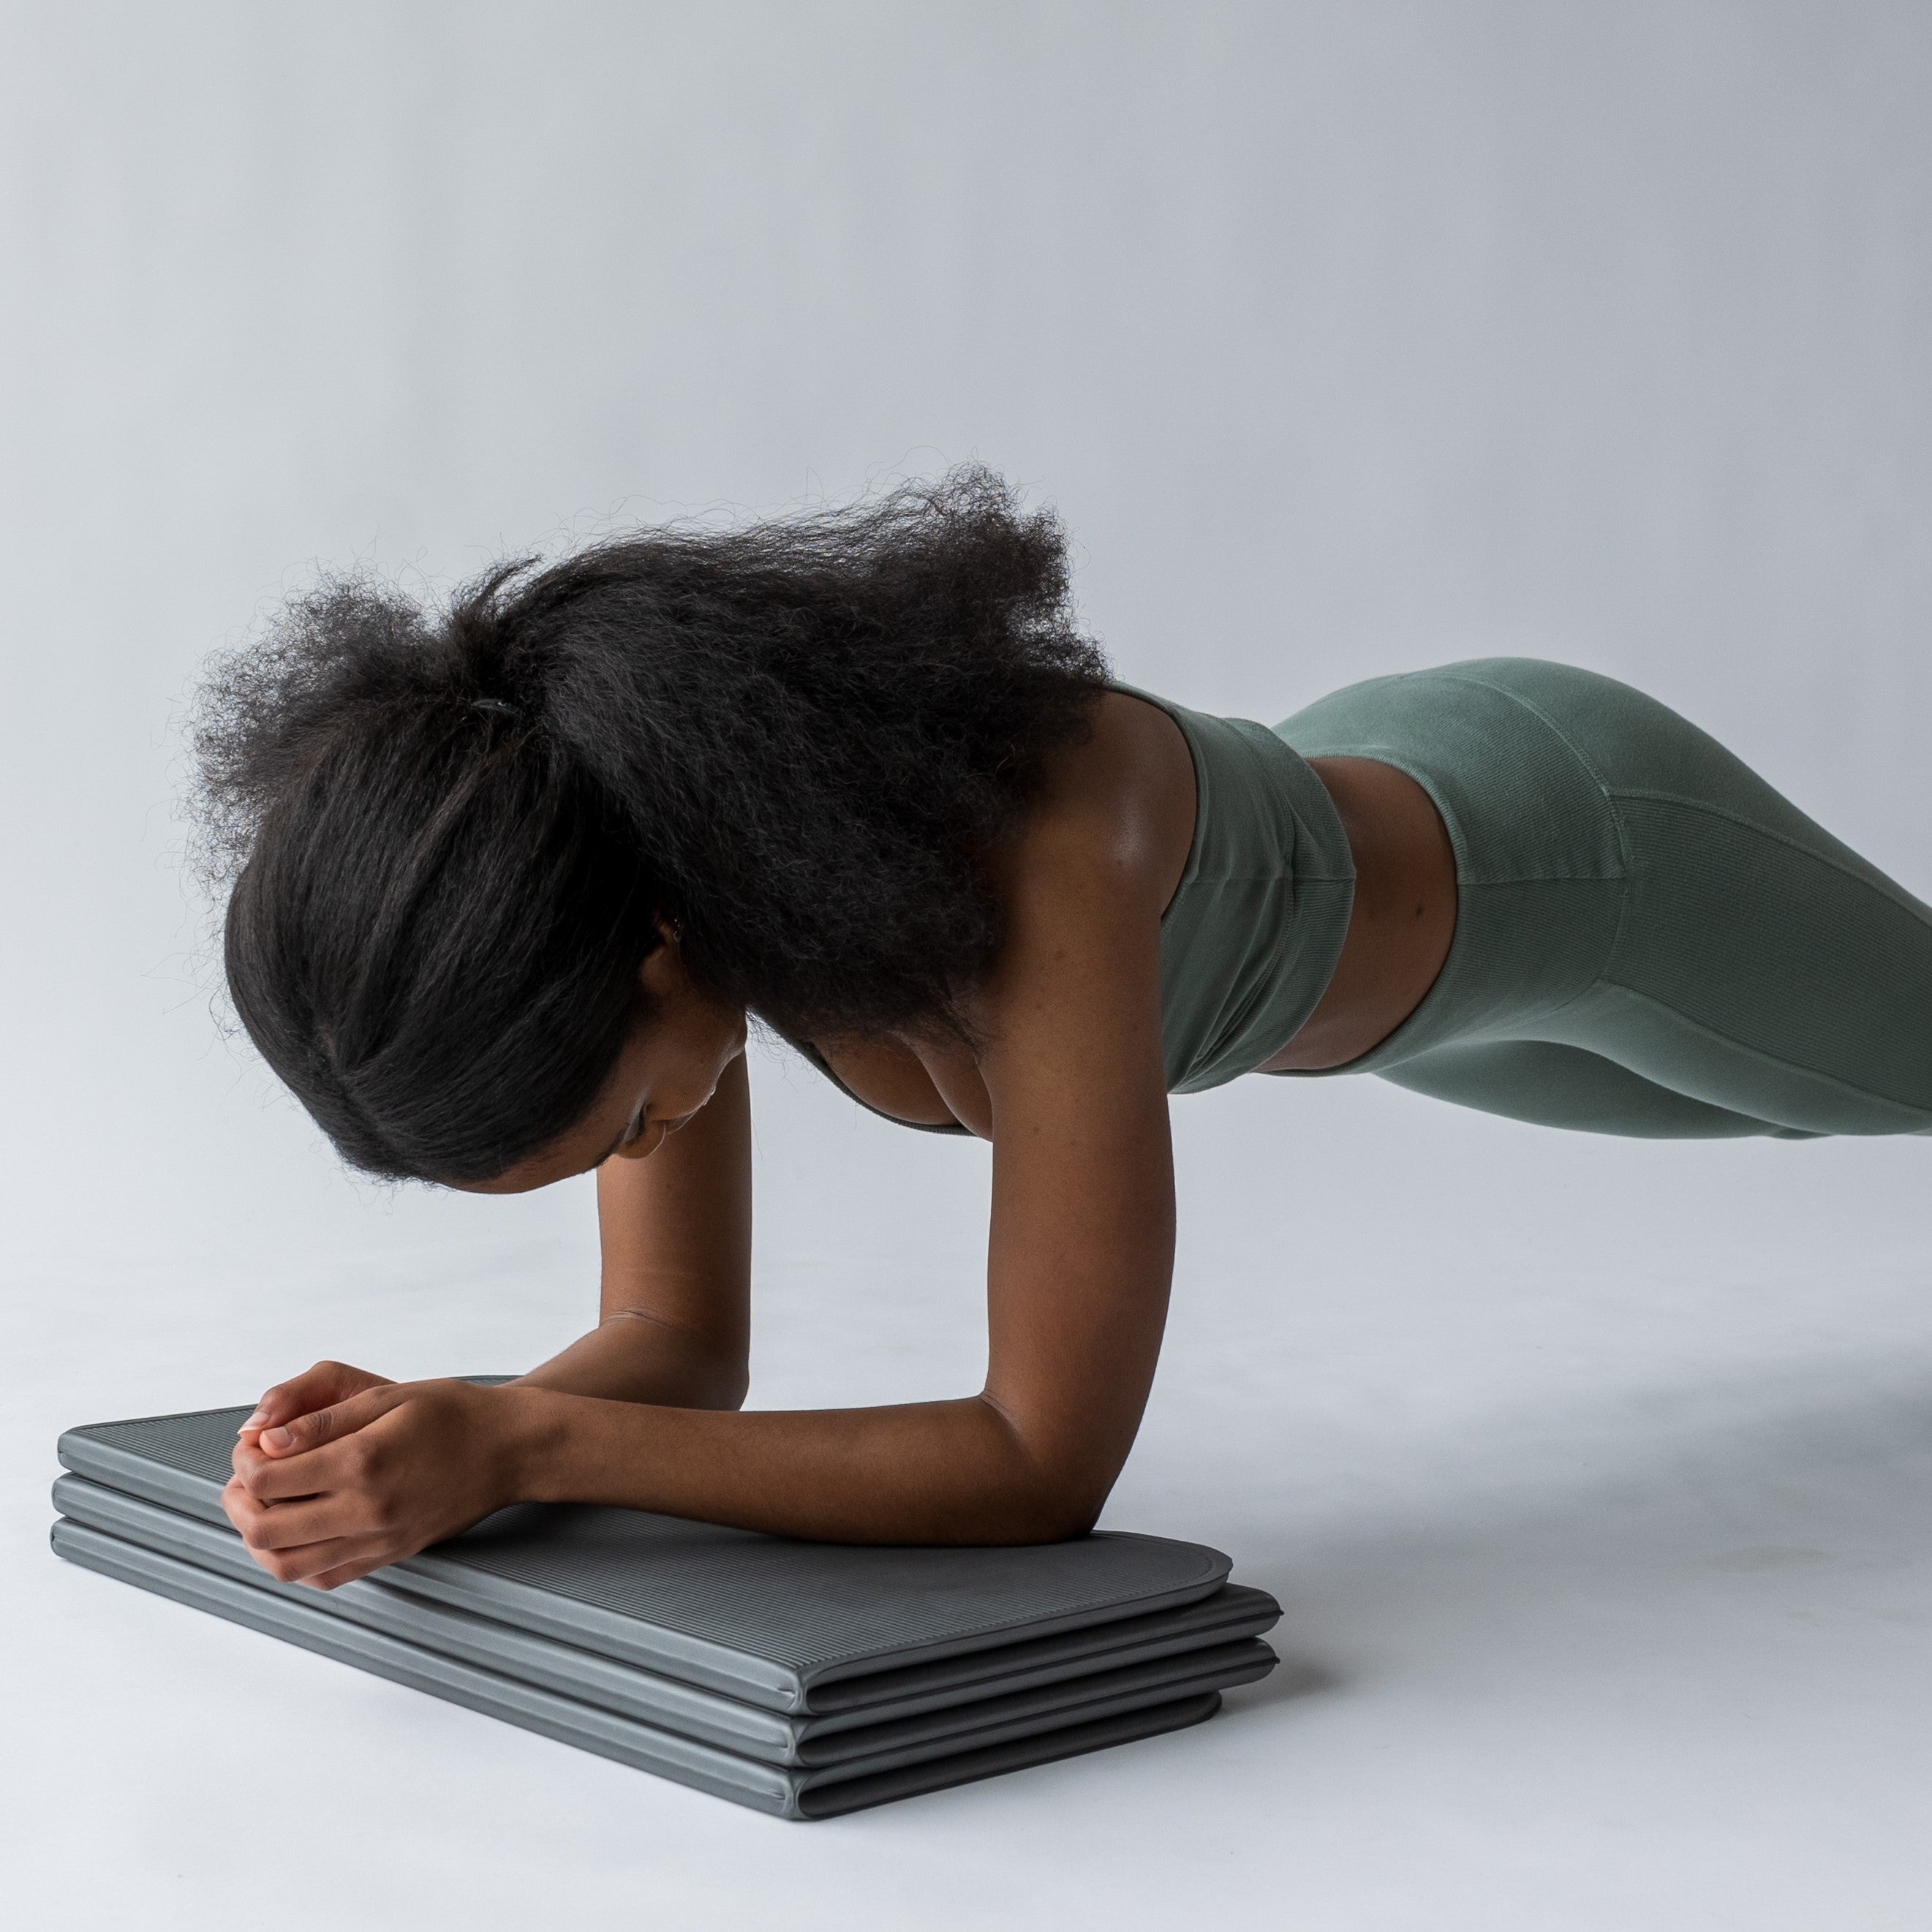 Zenzimat, Eco-Friendly, Foldable & Anti-Slip Yoga Mat